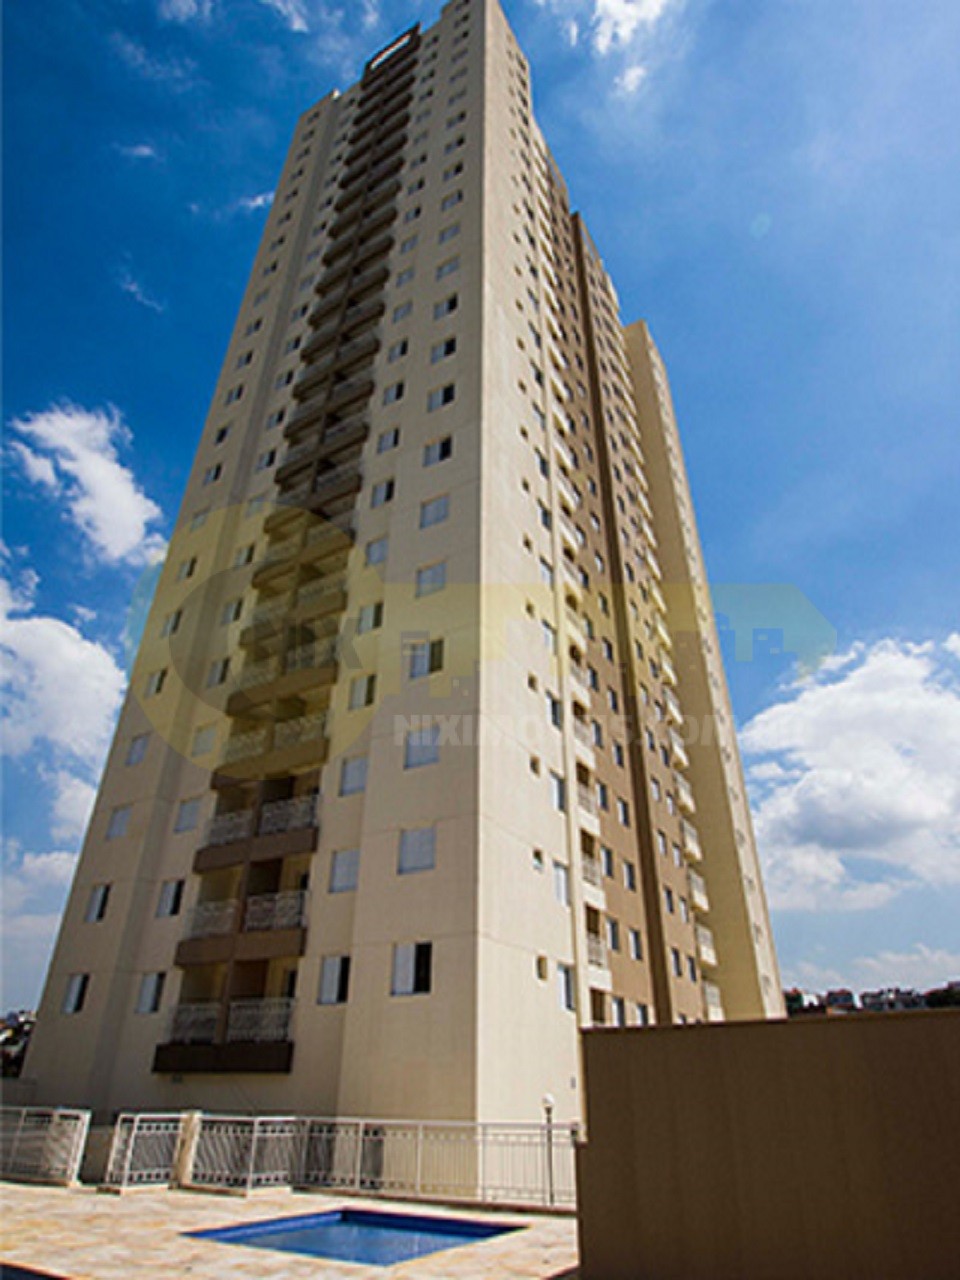 Compra Apartamento Butanta USP SP Brasil barato Proximo Corifeu Metro 55m², 2 quartos, varanda. Condomínio clube moderno completo com piscina e academia!